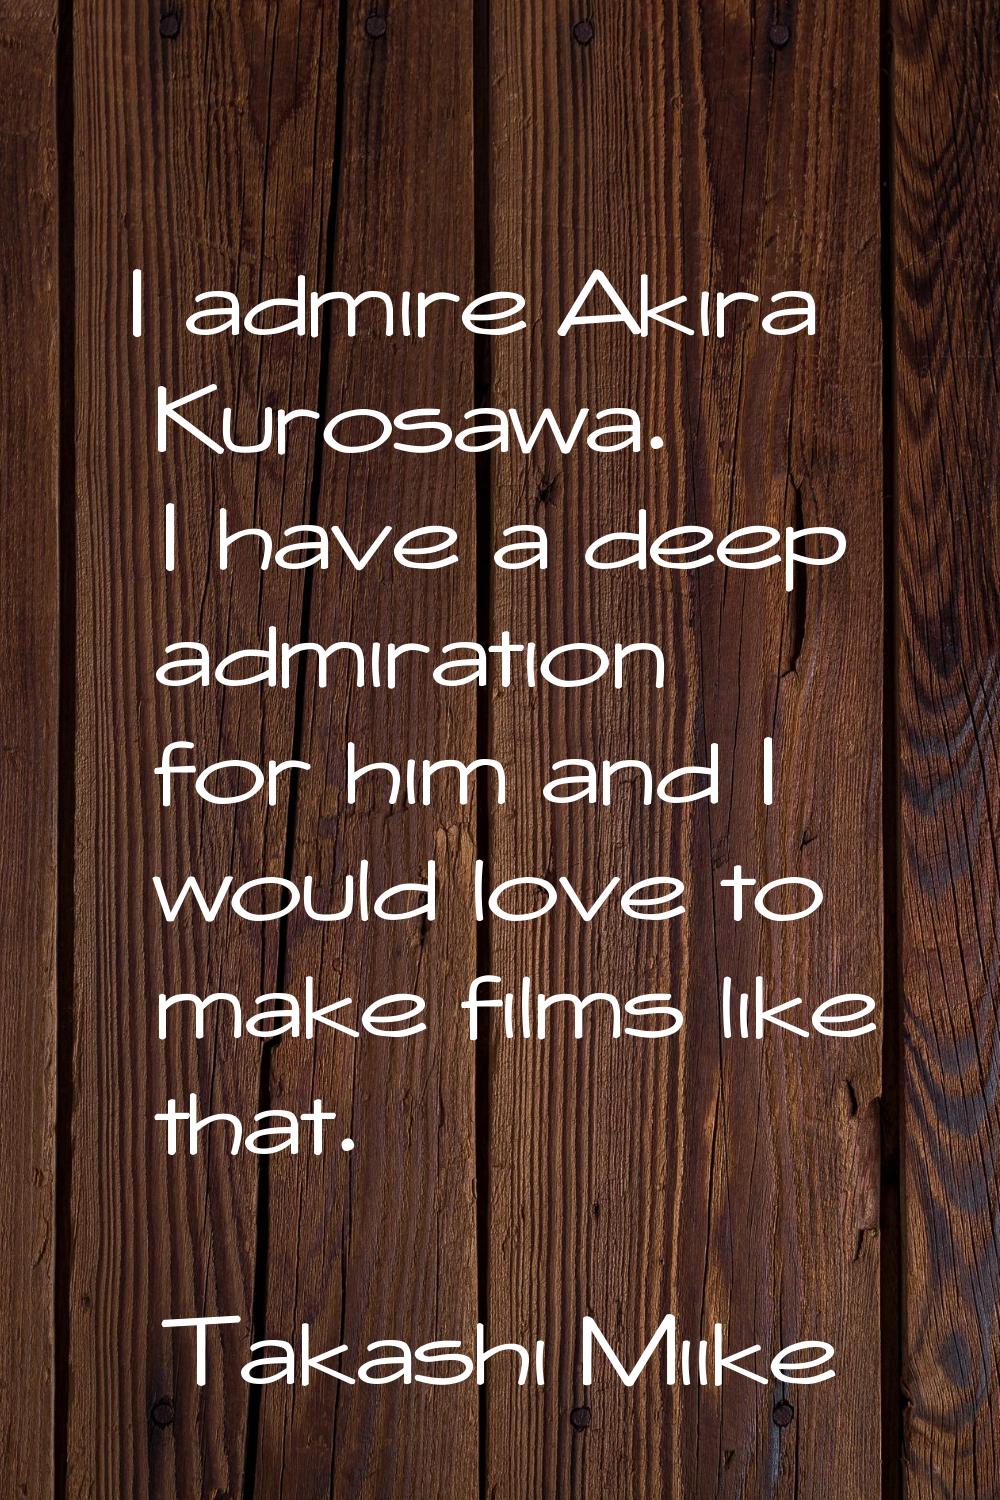 I admire Akira Kurosawa. I have a deep admiration for him and I would love to make films like that.